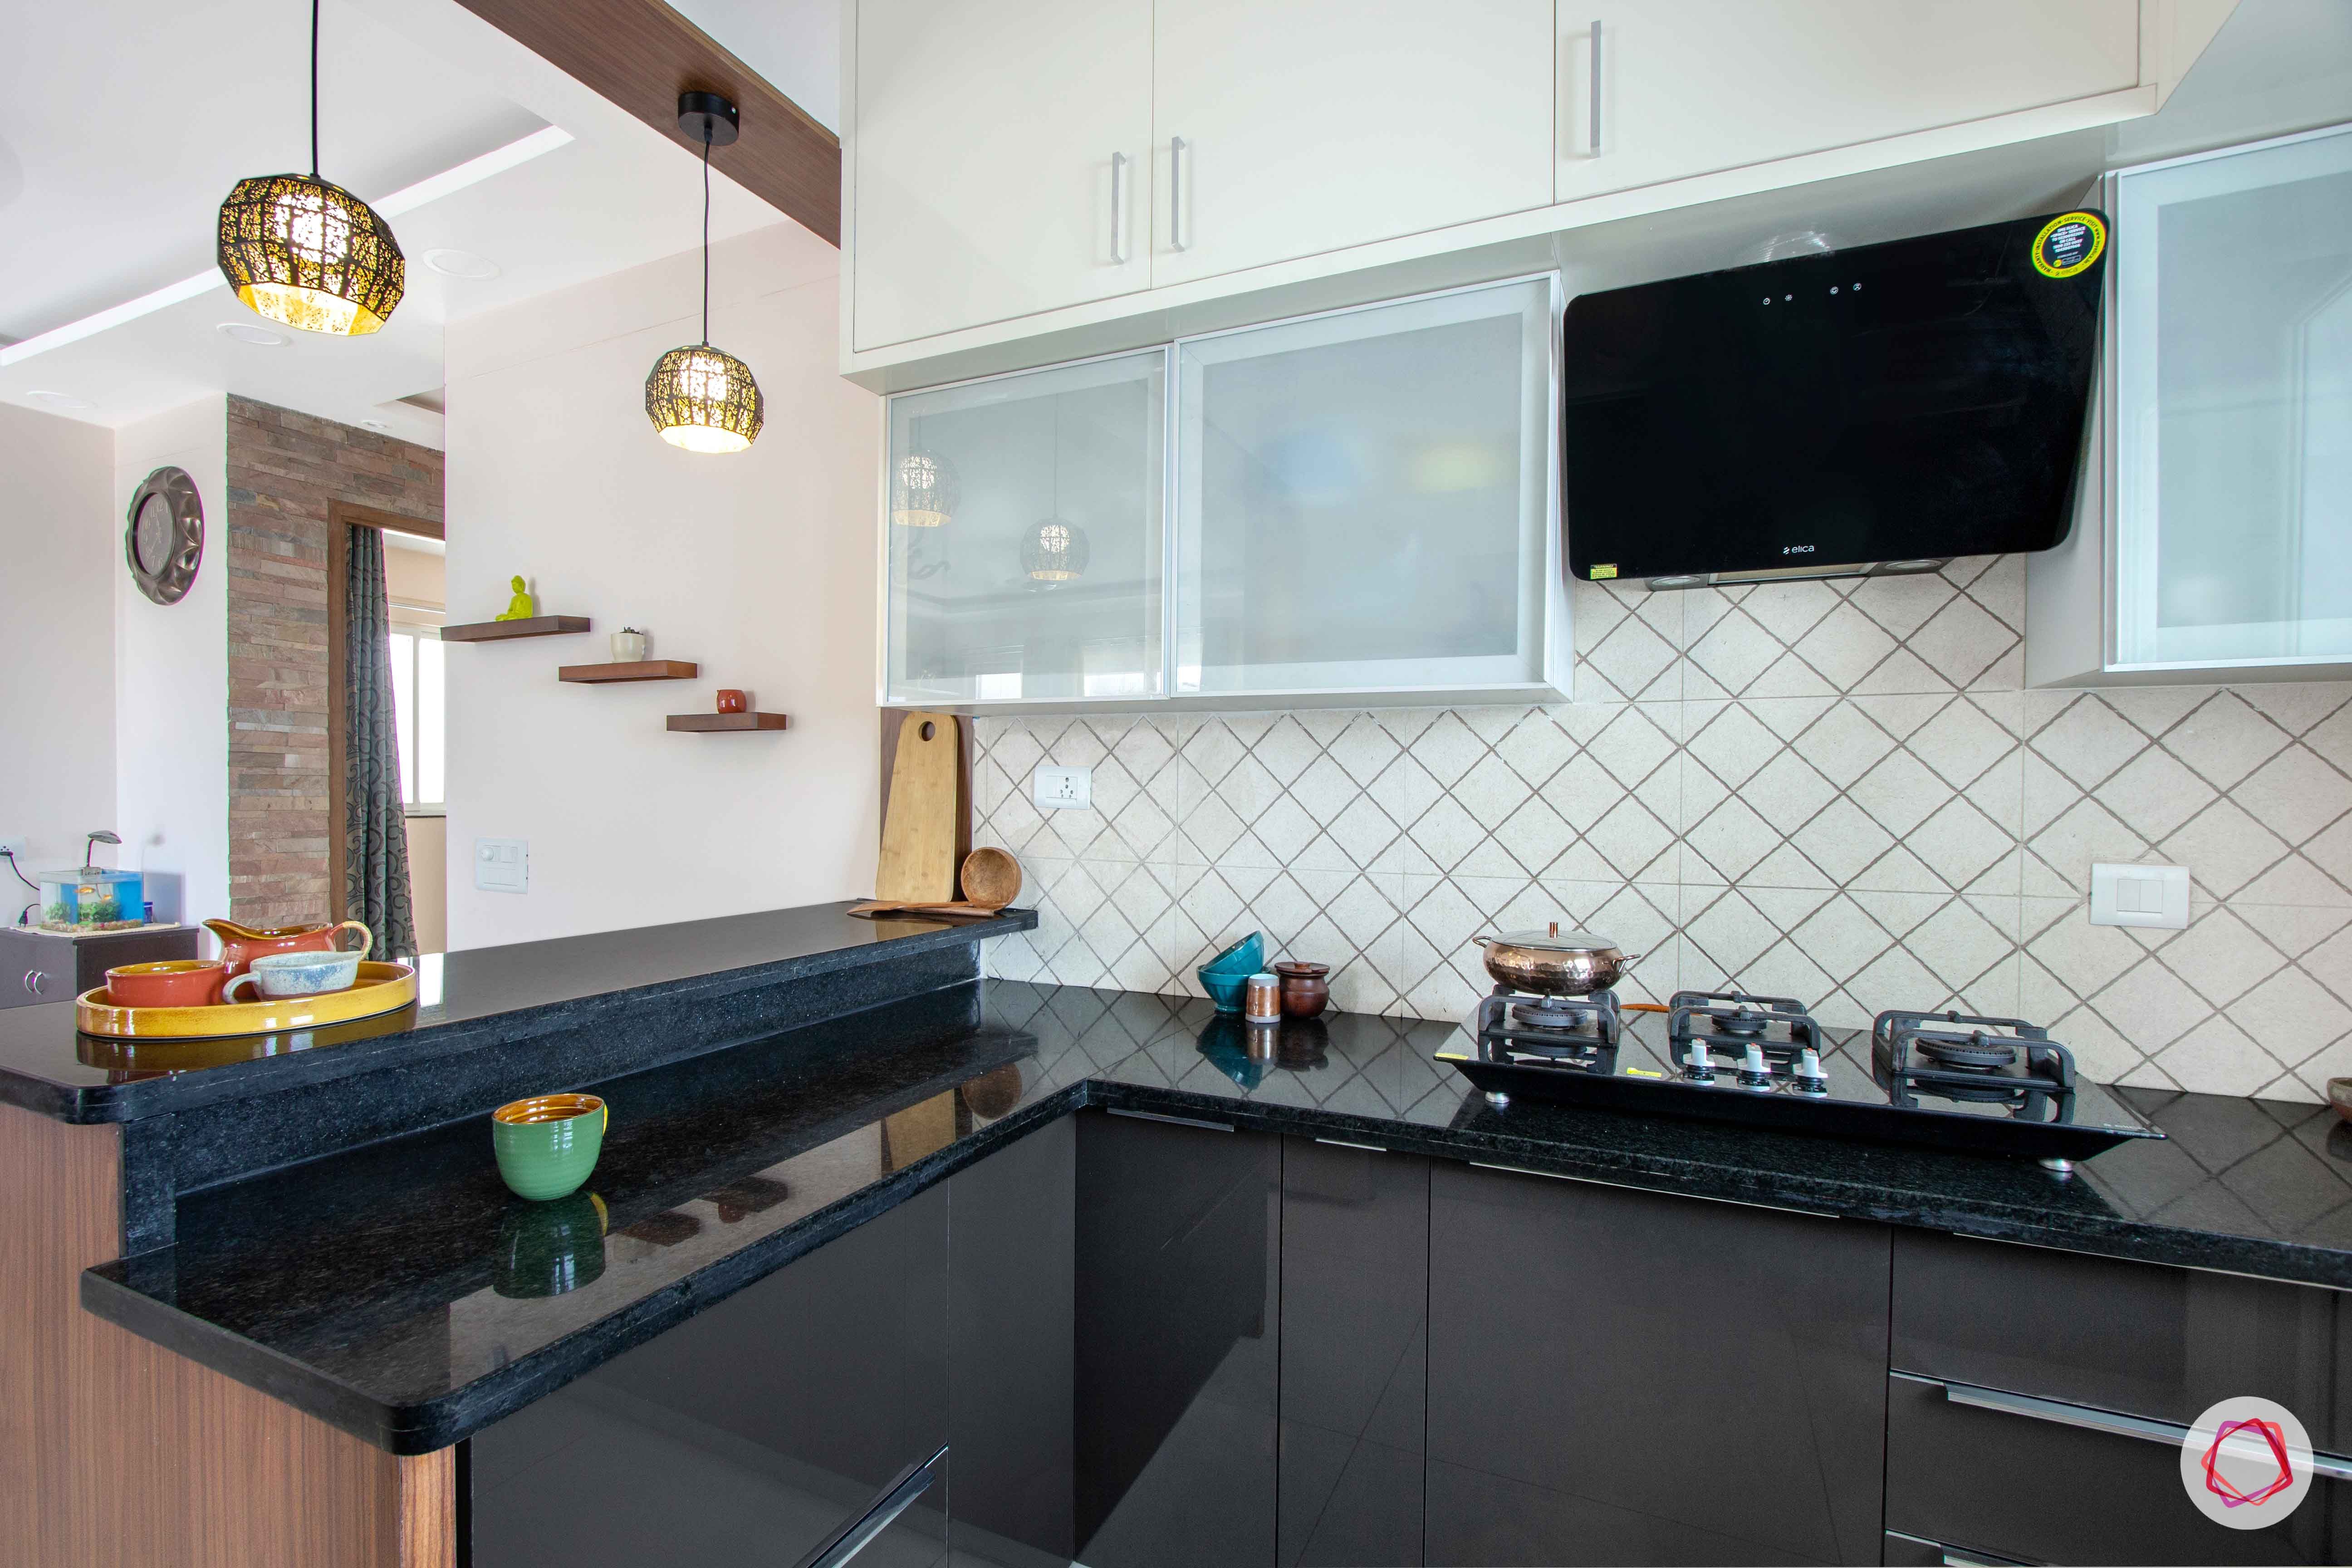 snn raj greenbay-grey kitchen cabinets-black countertop